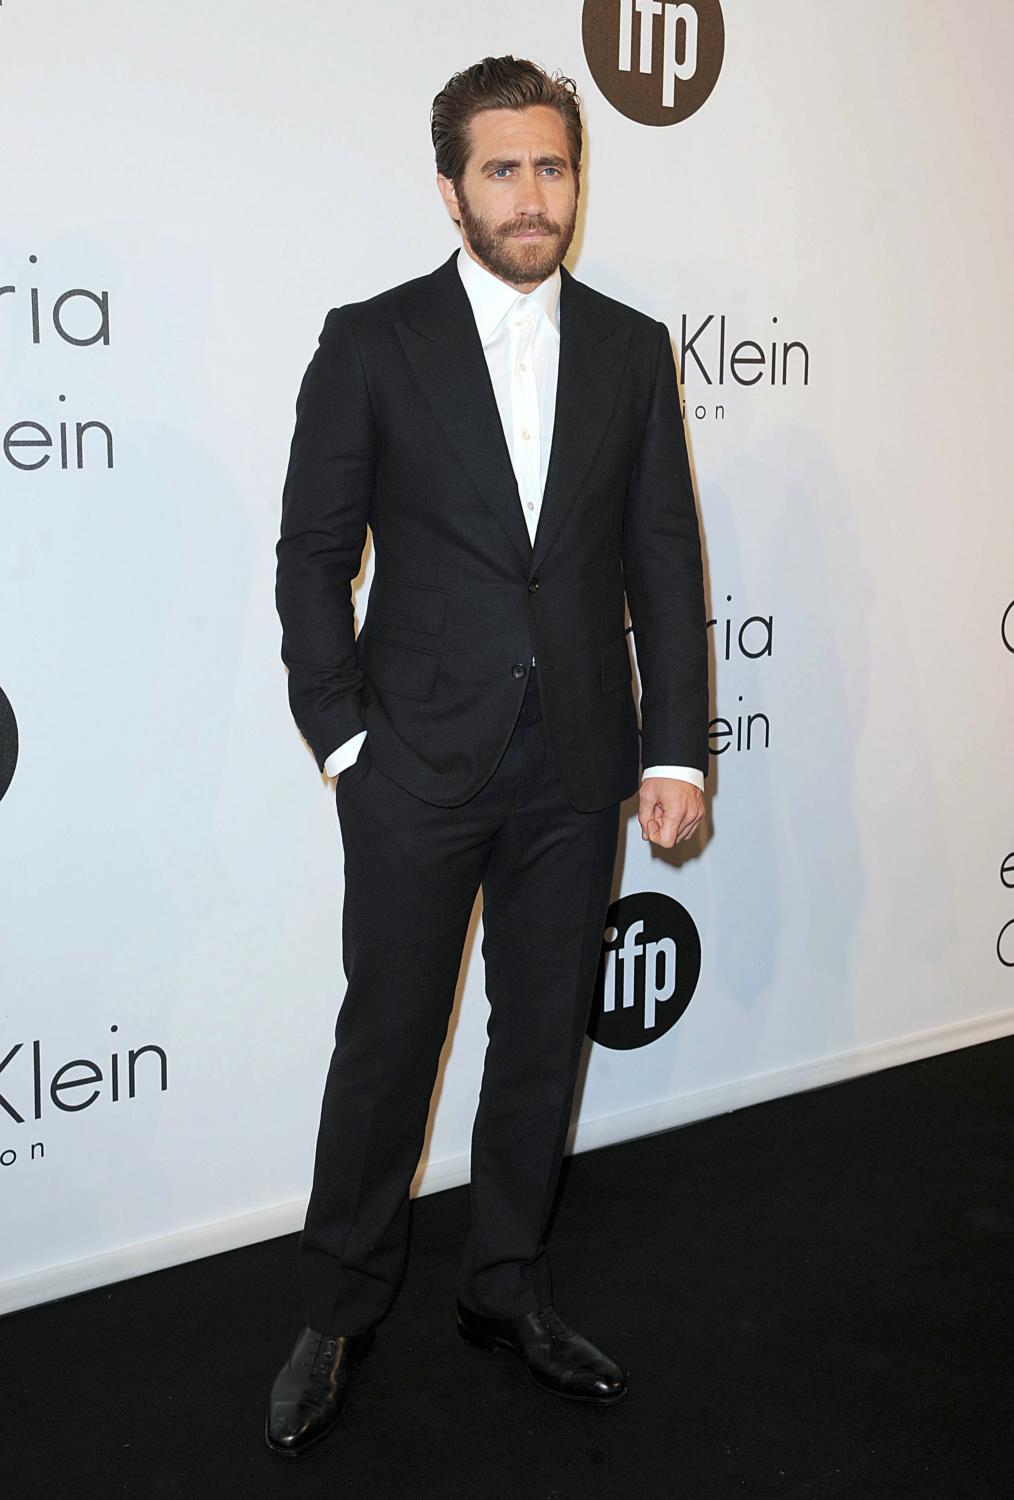 Jake Gyllenhaal attendse Calvin Klein Party – Celeb Donut